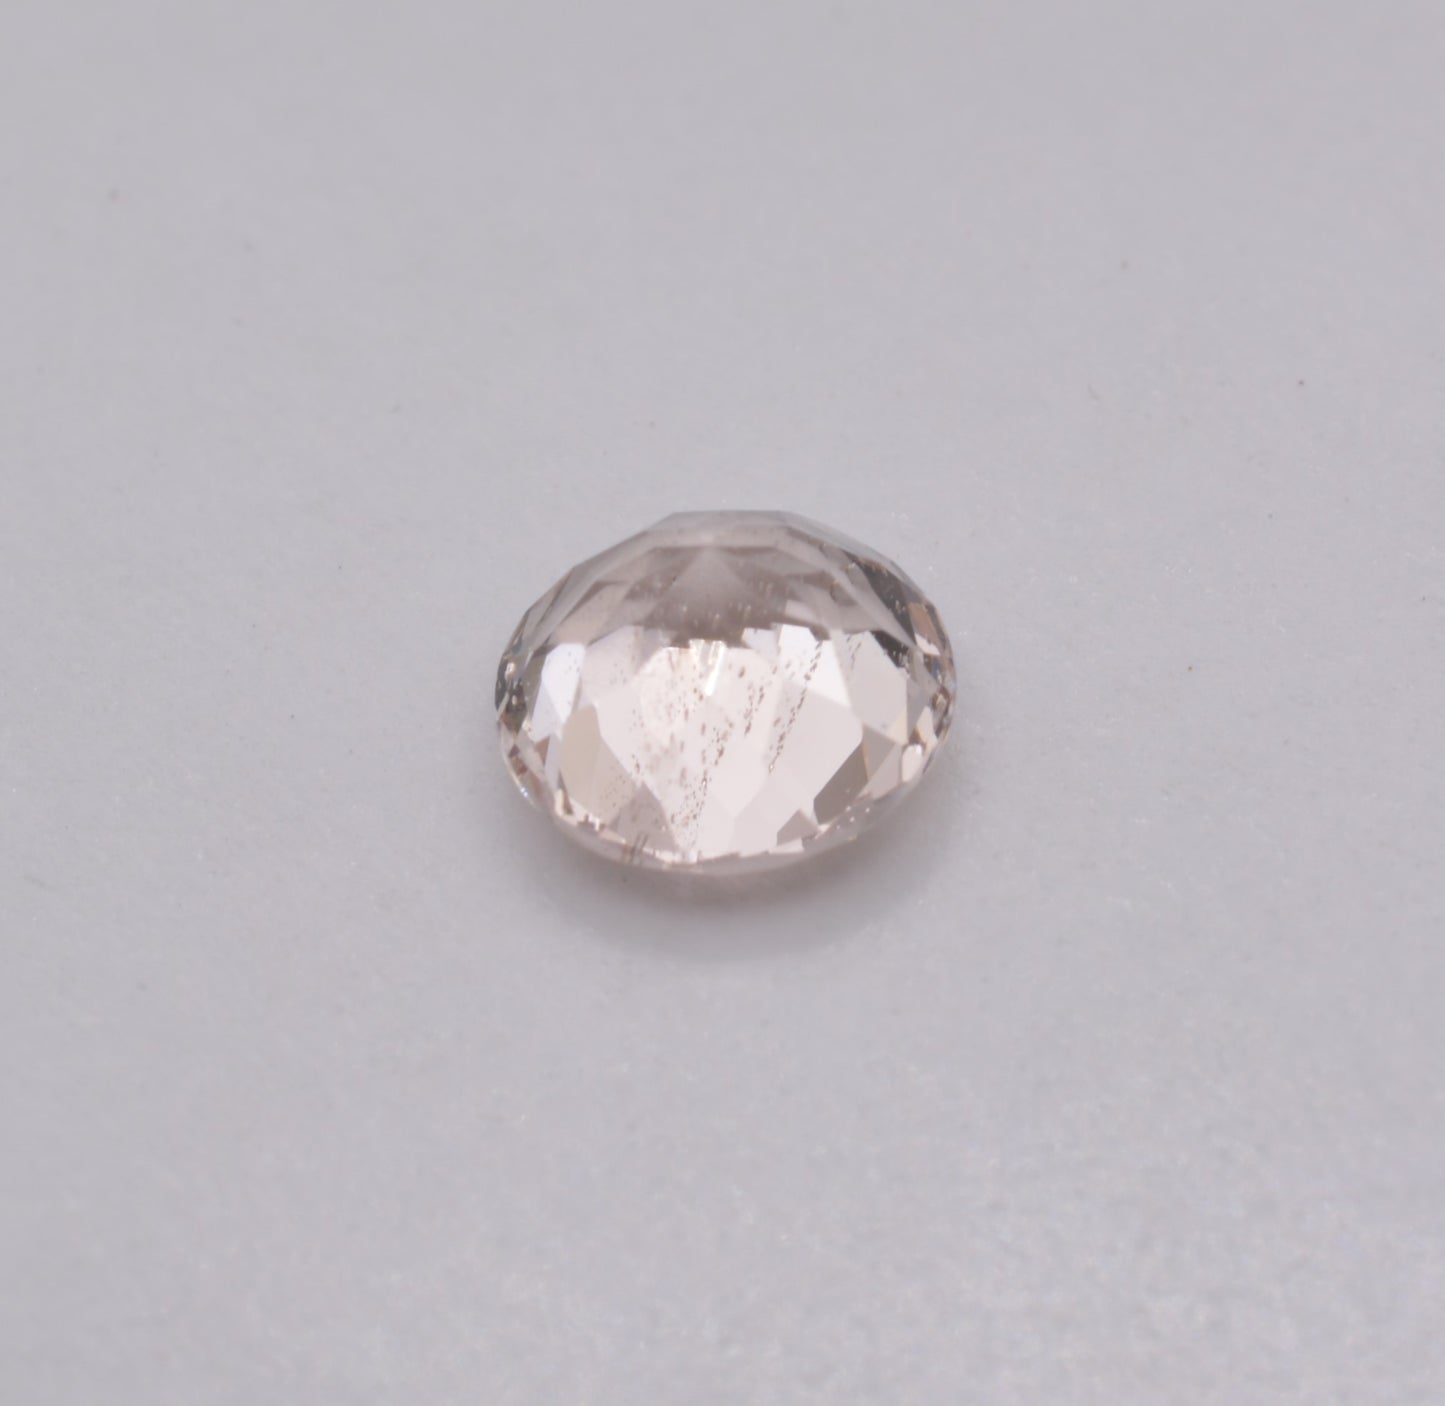 Morganite Ronde 1,36ct - pierre précieuse - gemme